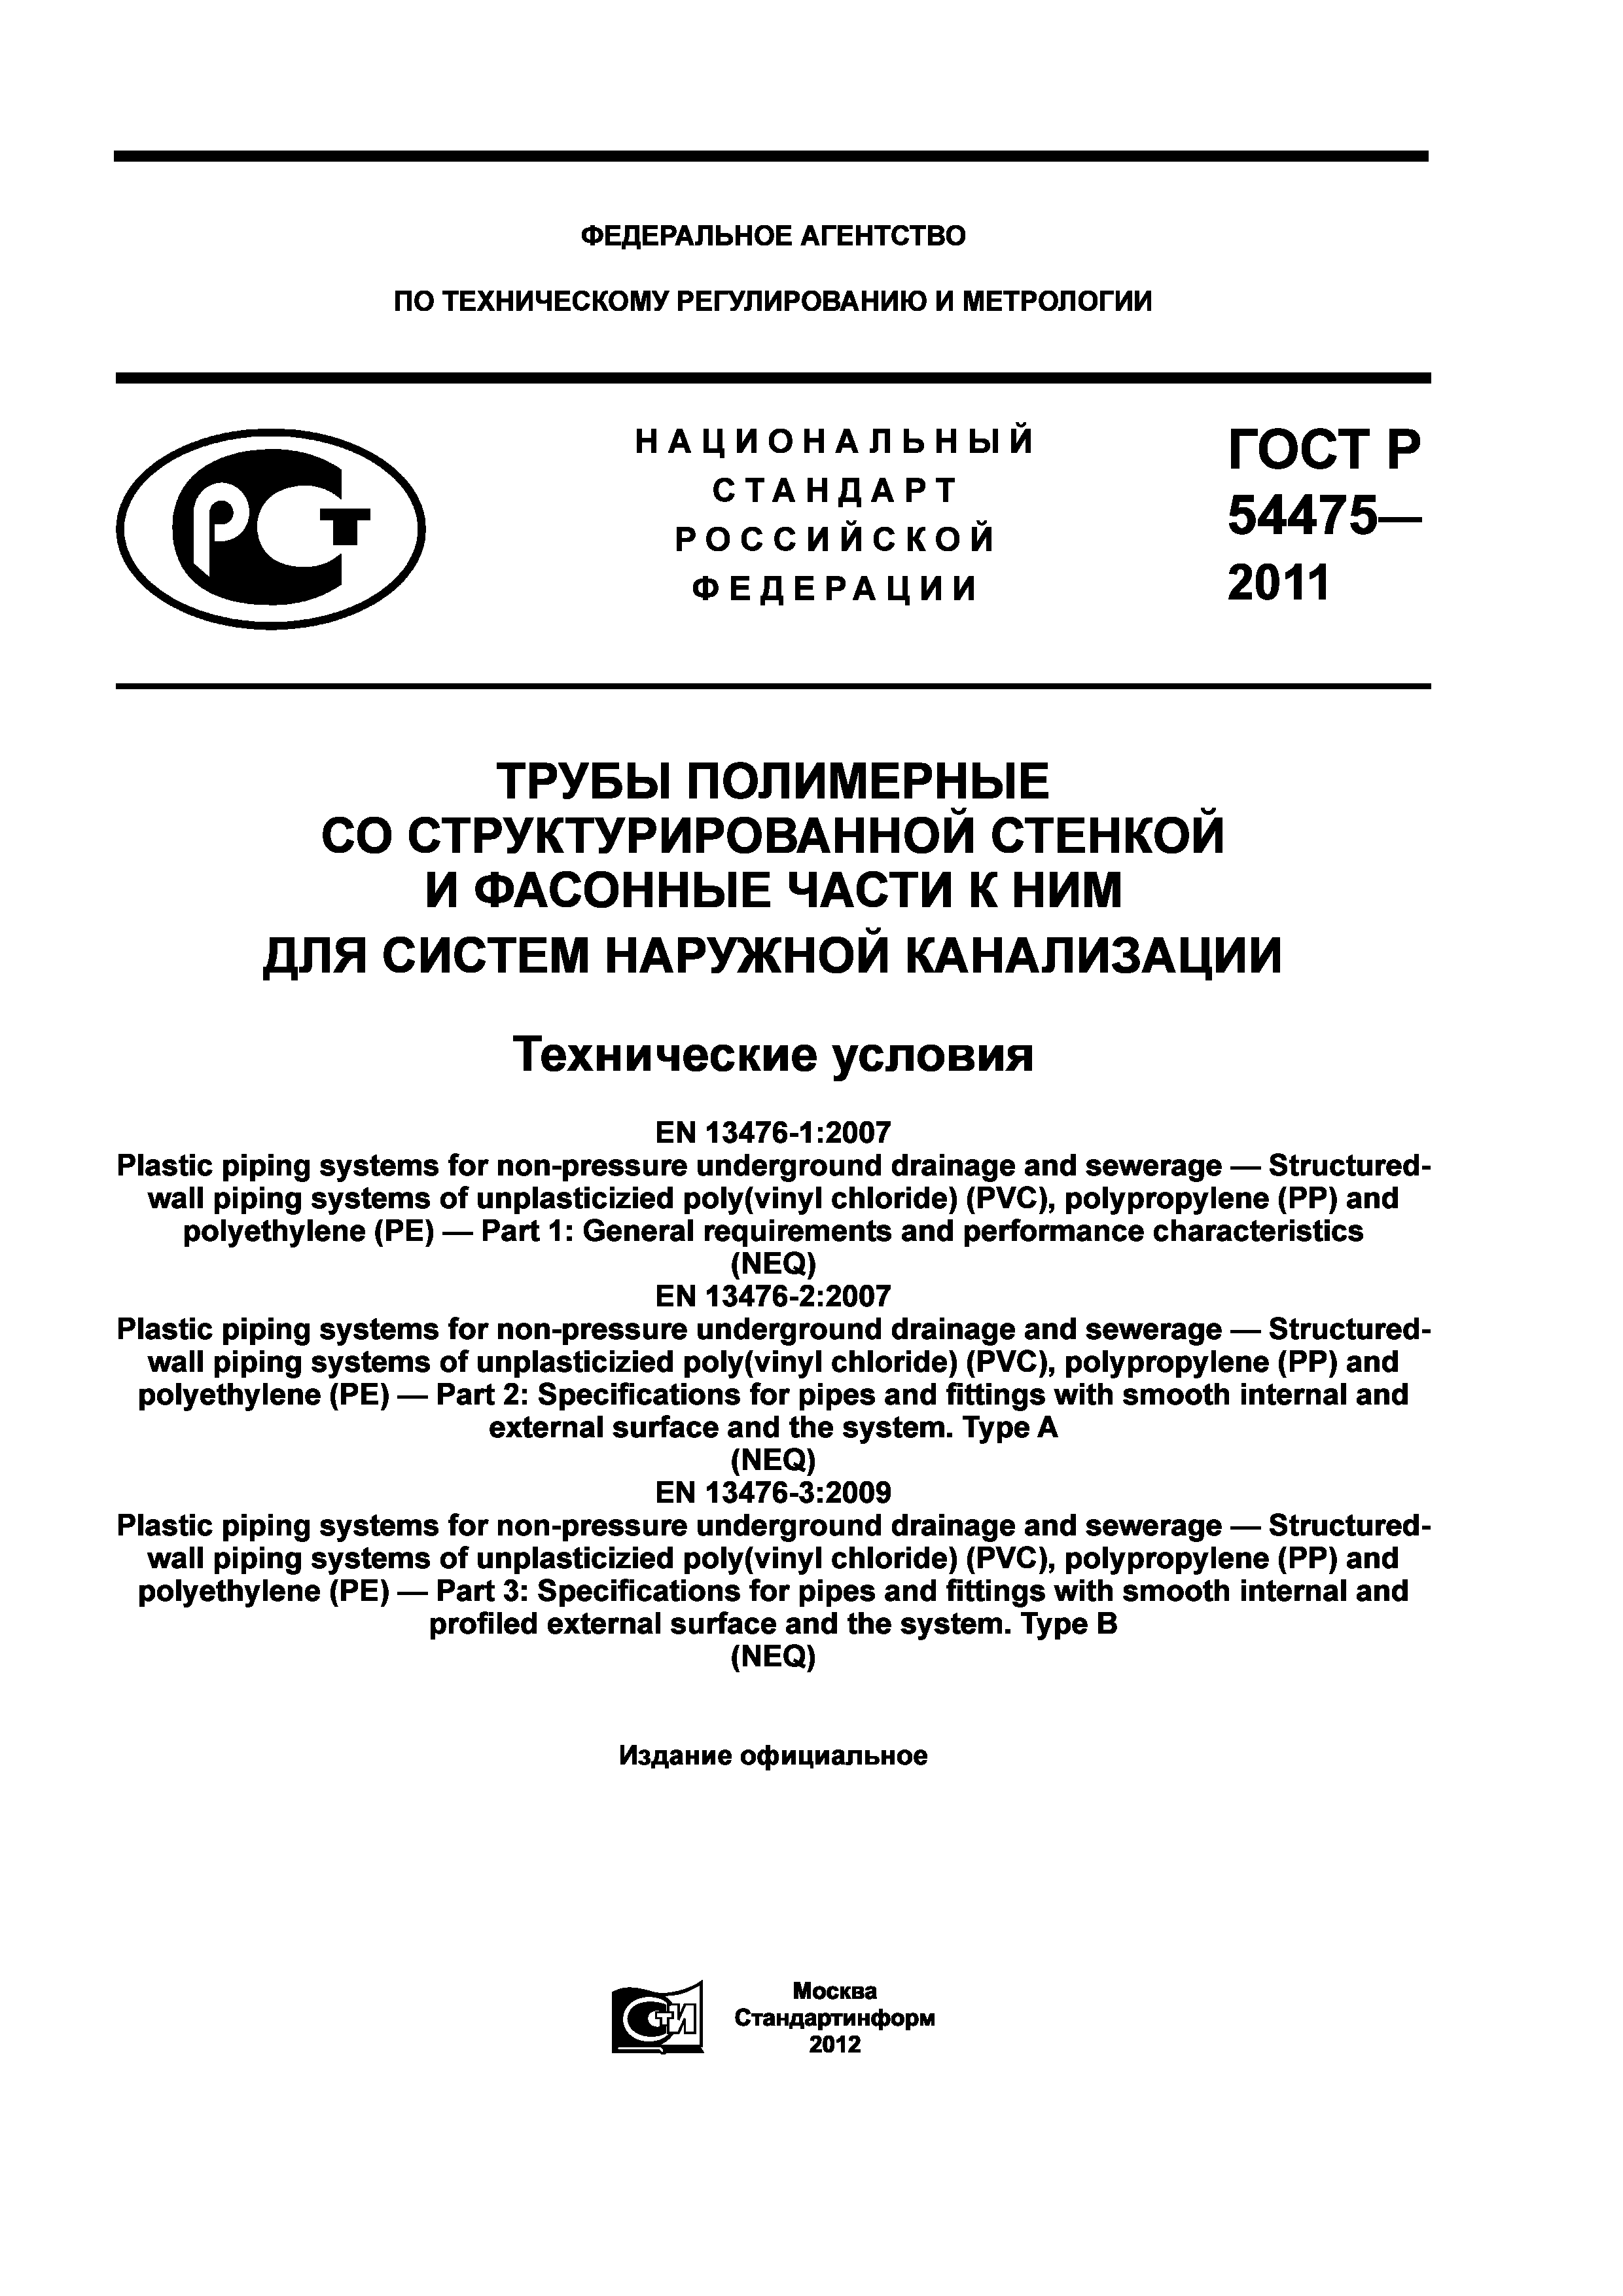 ГОСТ Р 54475-2011